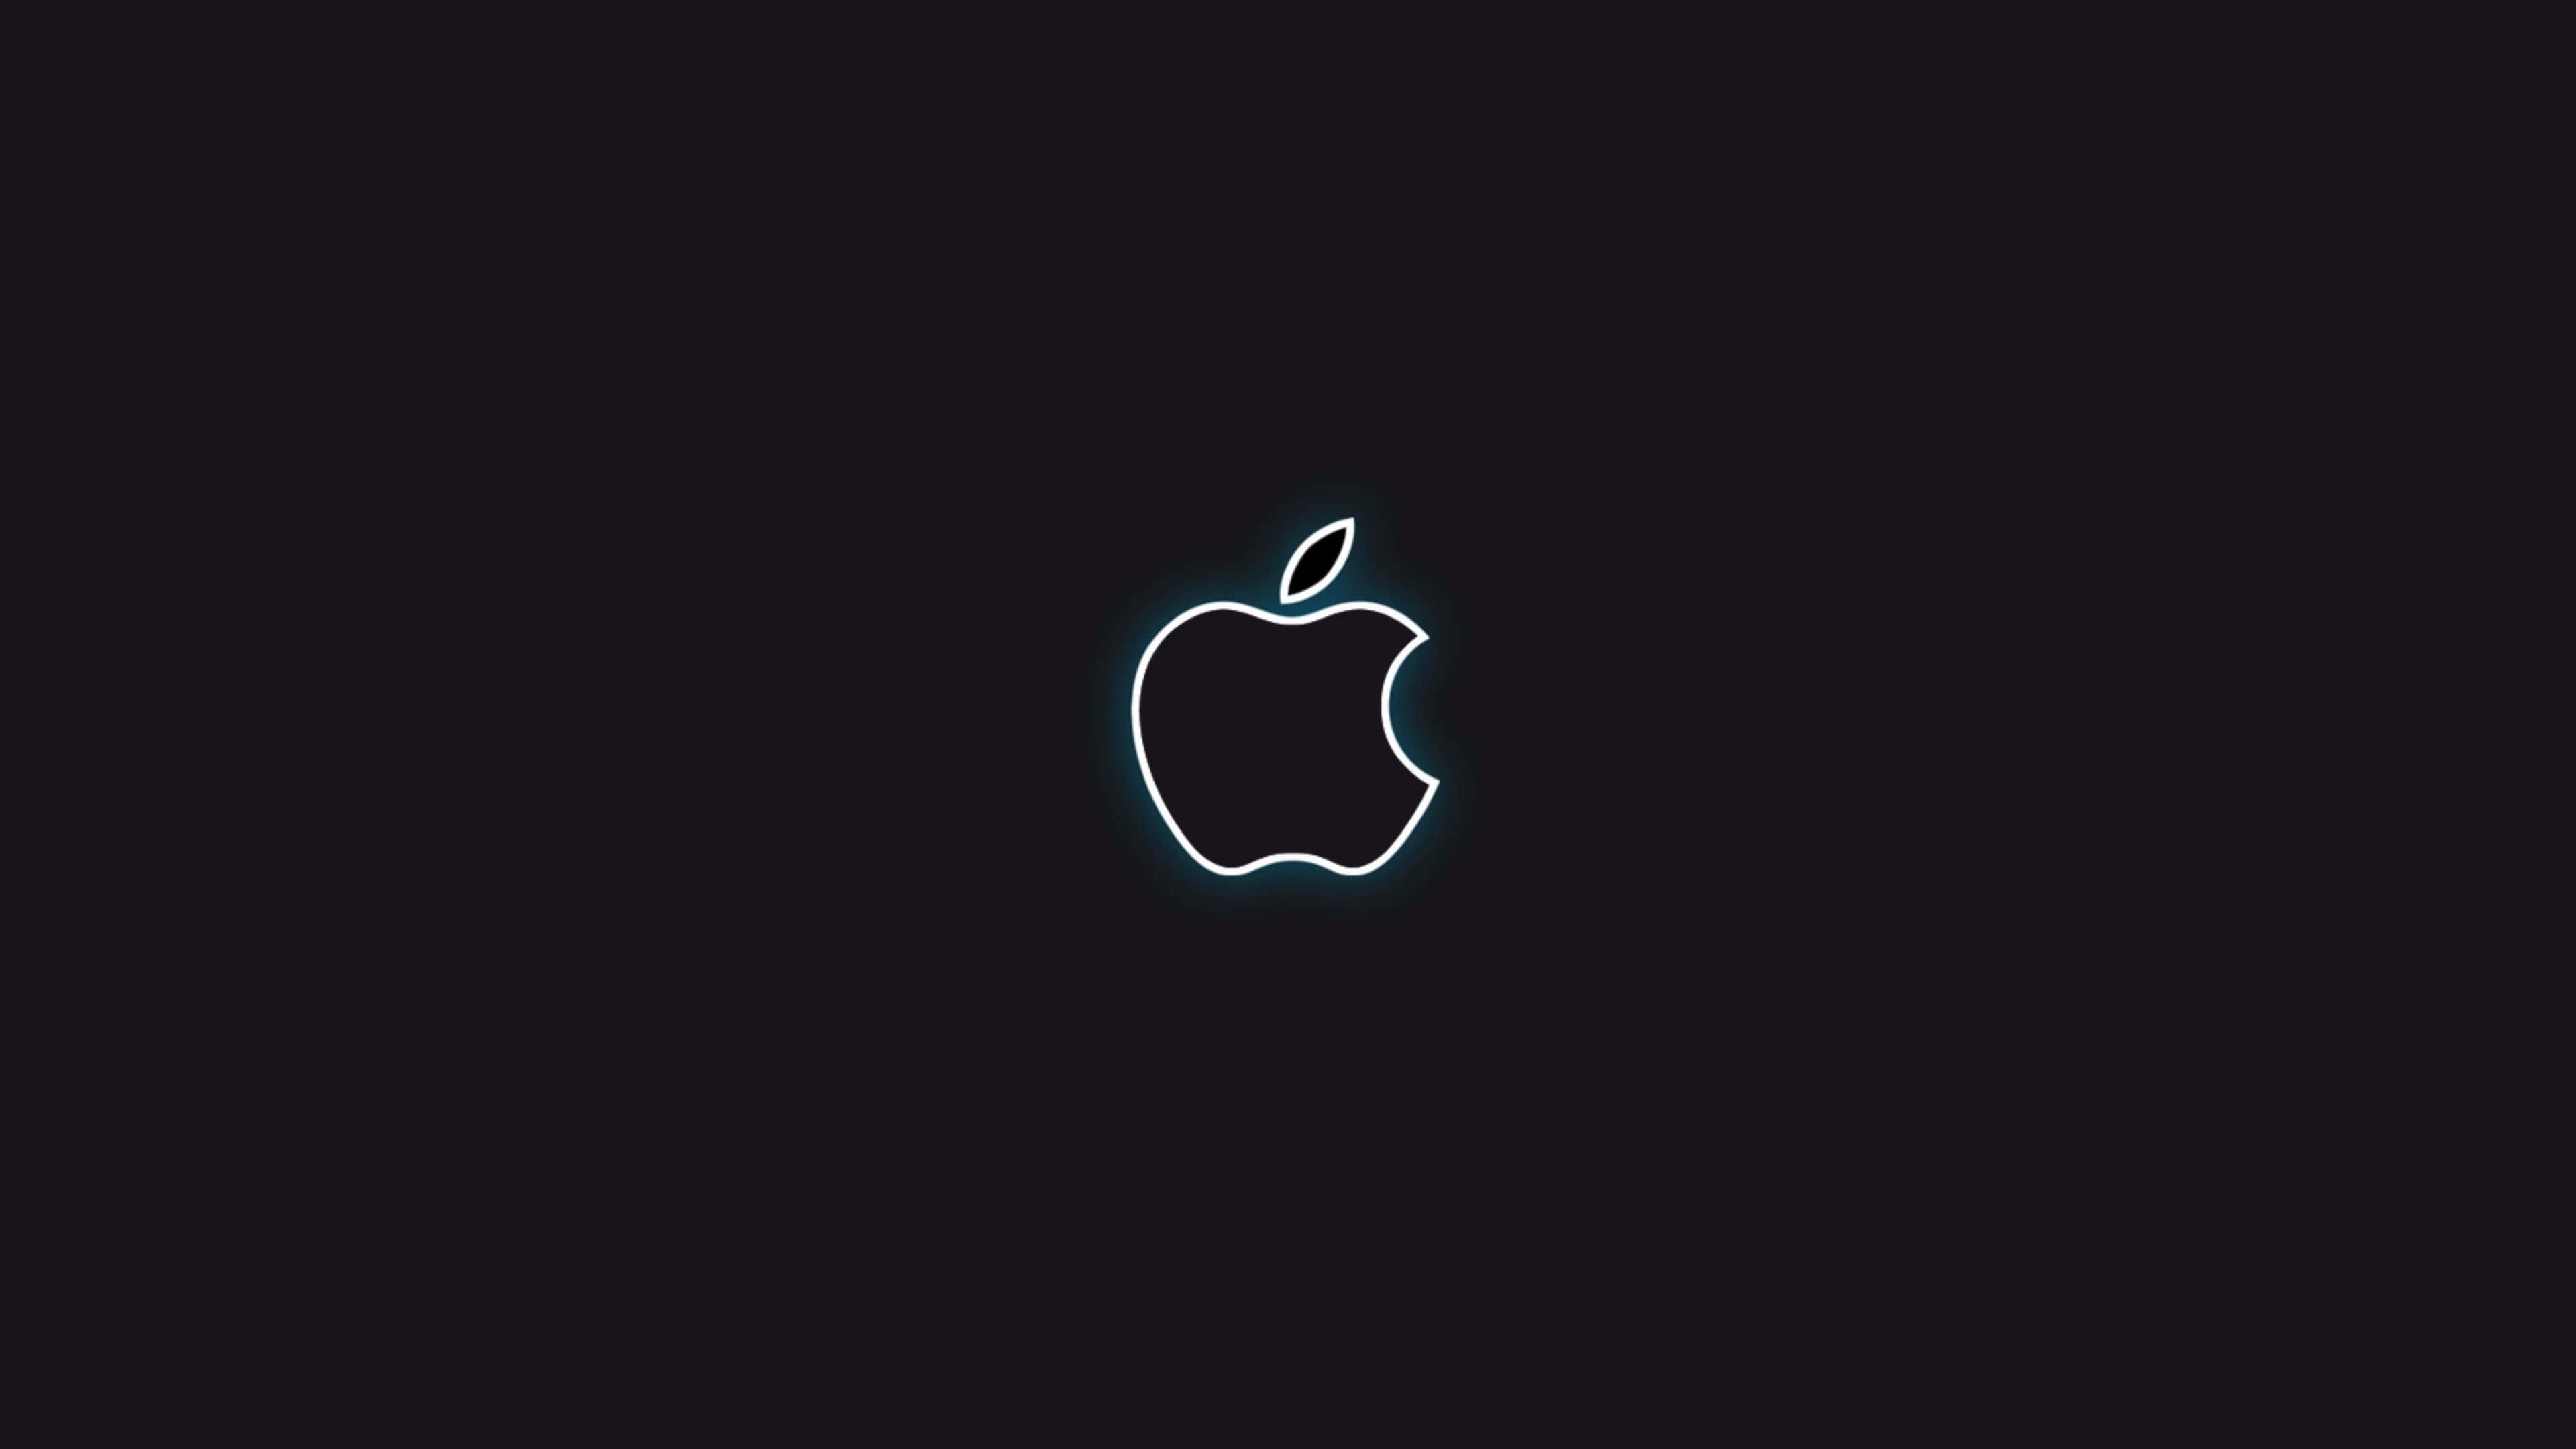 Download Black Apple Logo Wallpaper | Wallpapers.com